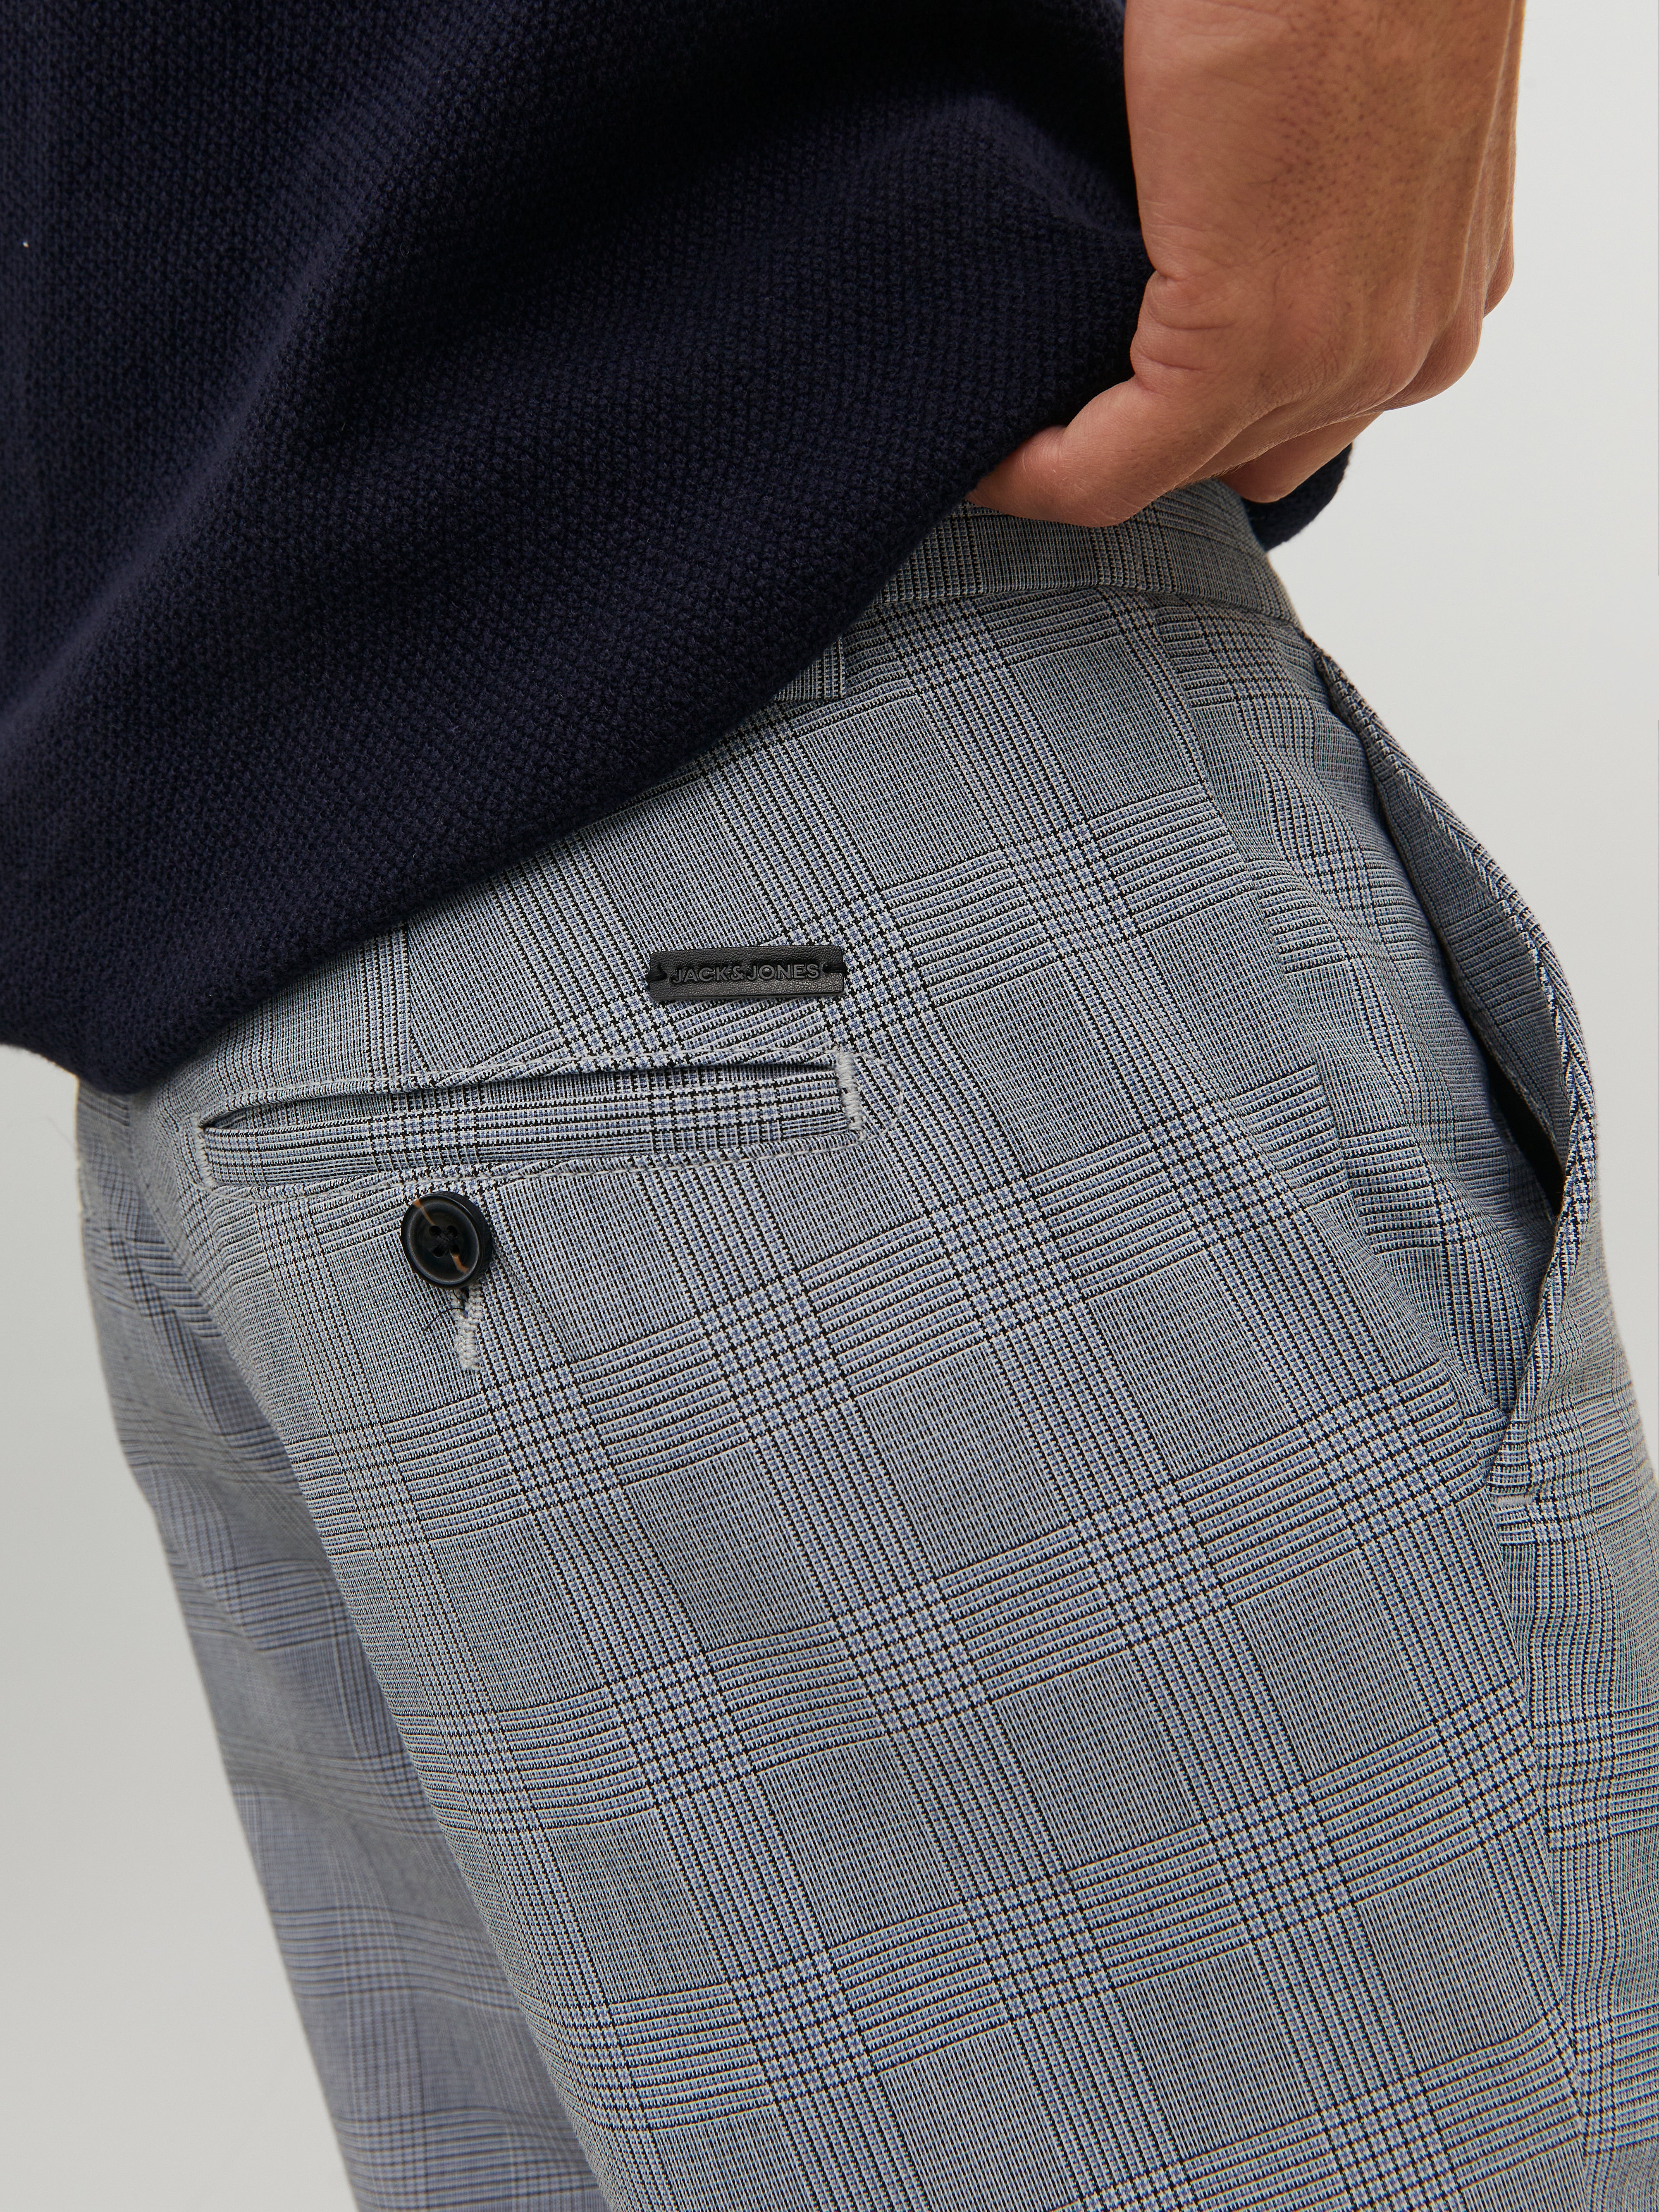 Buy Antony Morato Men Black Skinny Fit Formal Trousers - Trousers for Men  18470478 | Myntra